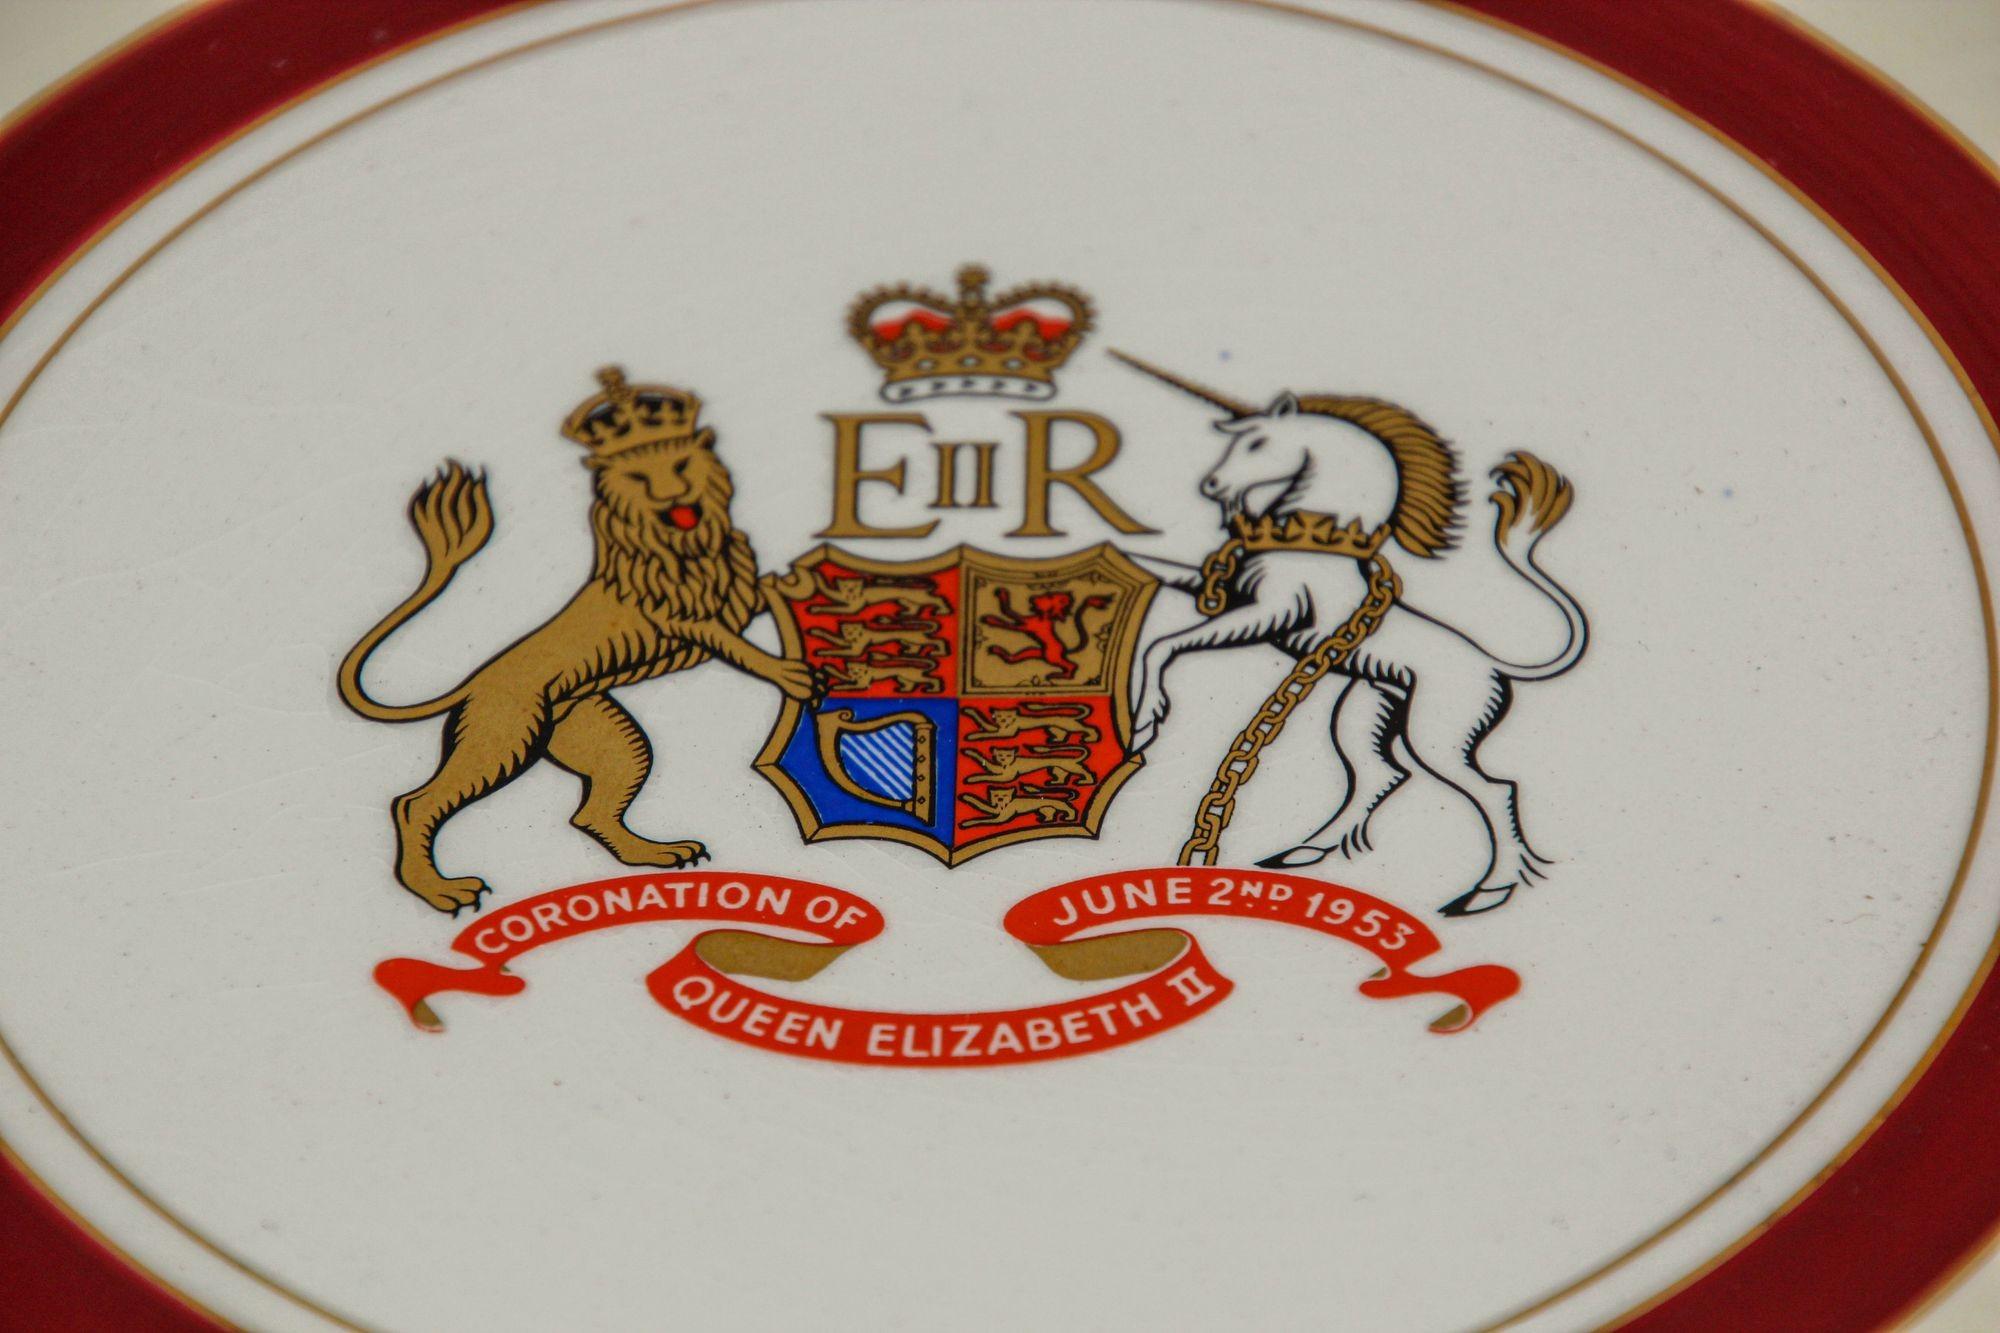 Elizabethan Coronation Plate Queen Elizabeth II June 2nd 1953 Burleigh Ware Burslem England For Sale